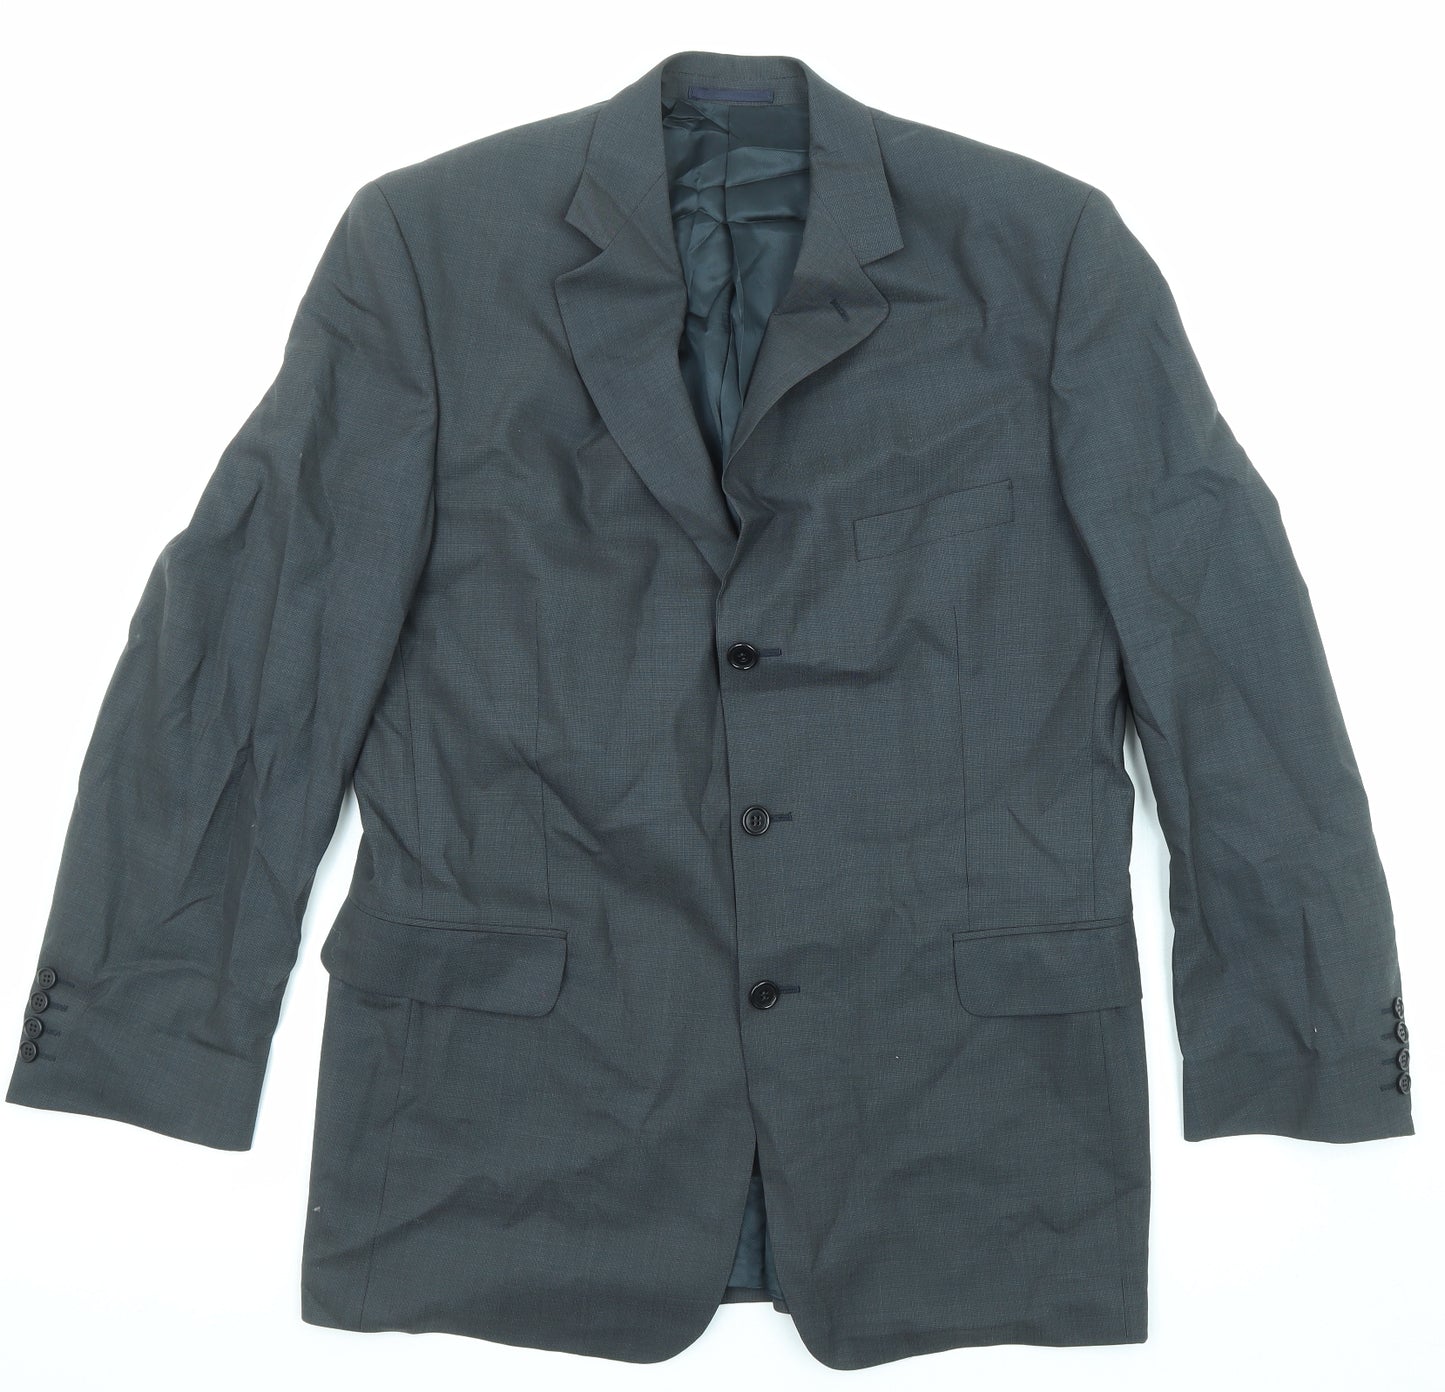 Jaeger Mens Grey Wool Jacket Suit Jacket Size 50 Regular